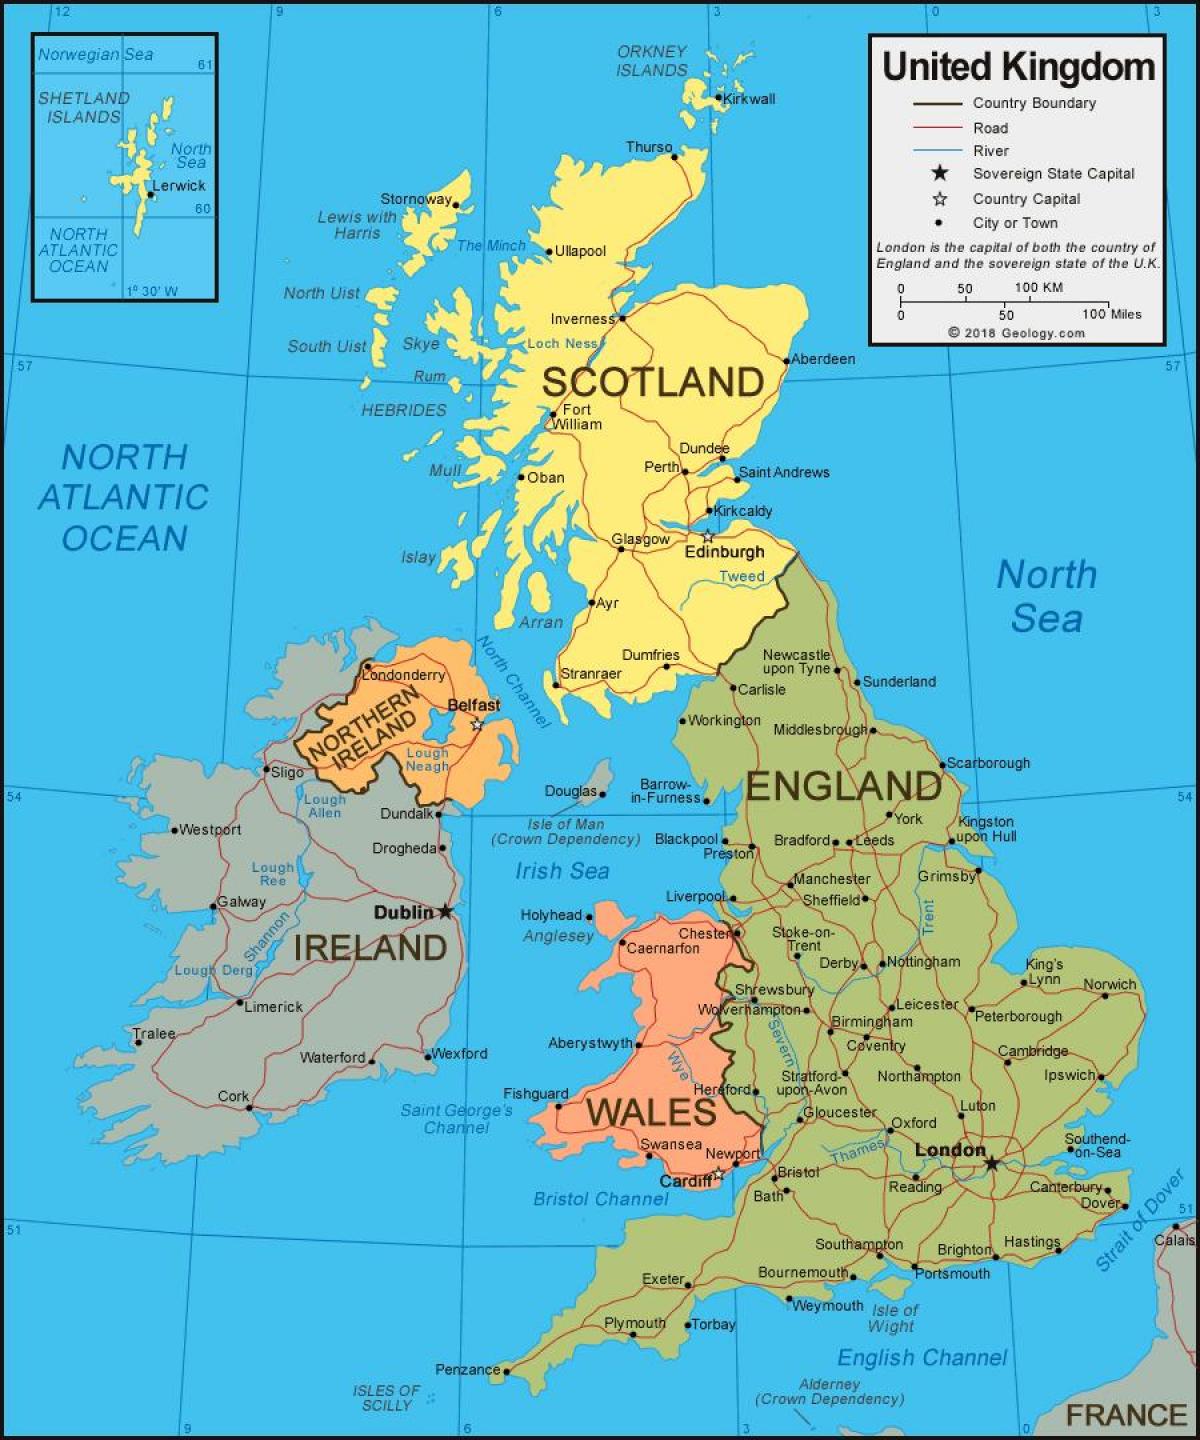 United Kingdom (UK) on a map